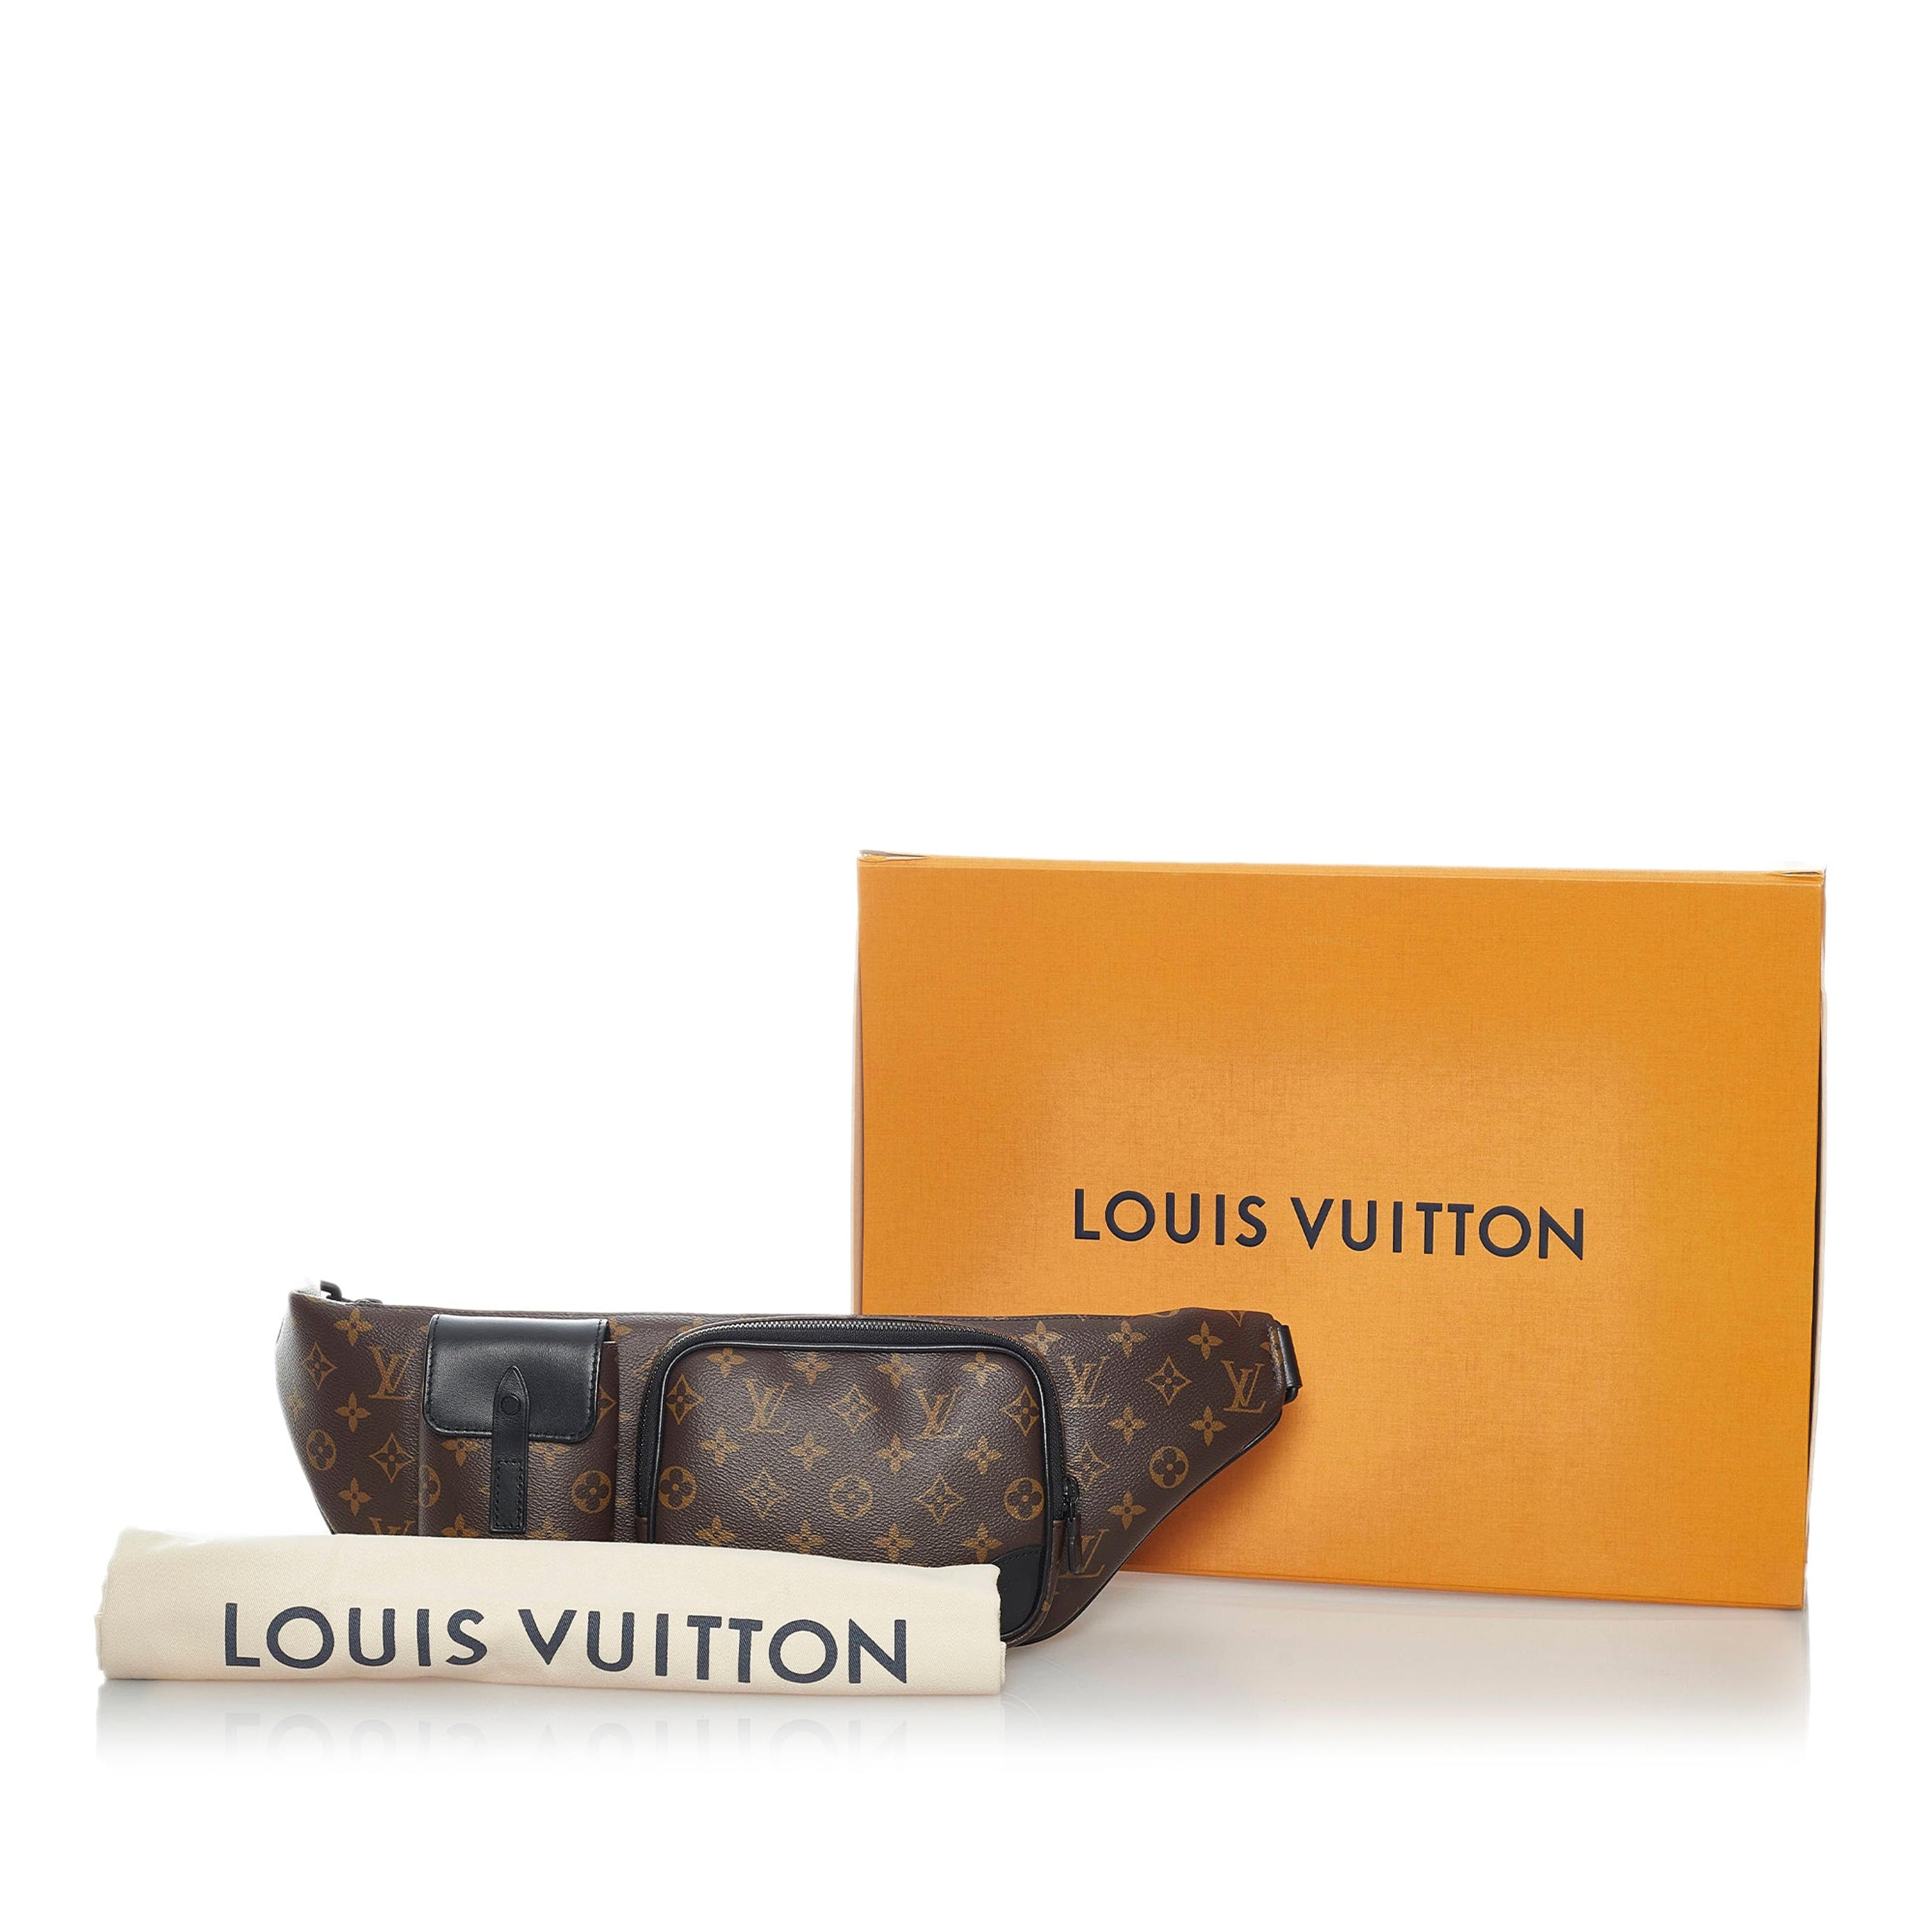 Louis Vuitton CHRISTOPHER Christopher bumbag (M45337)